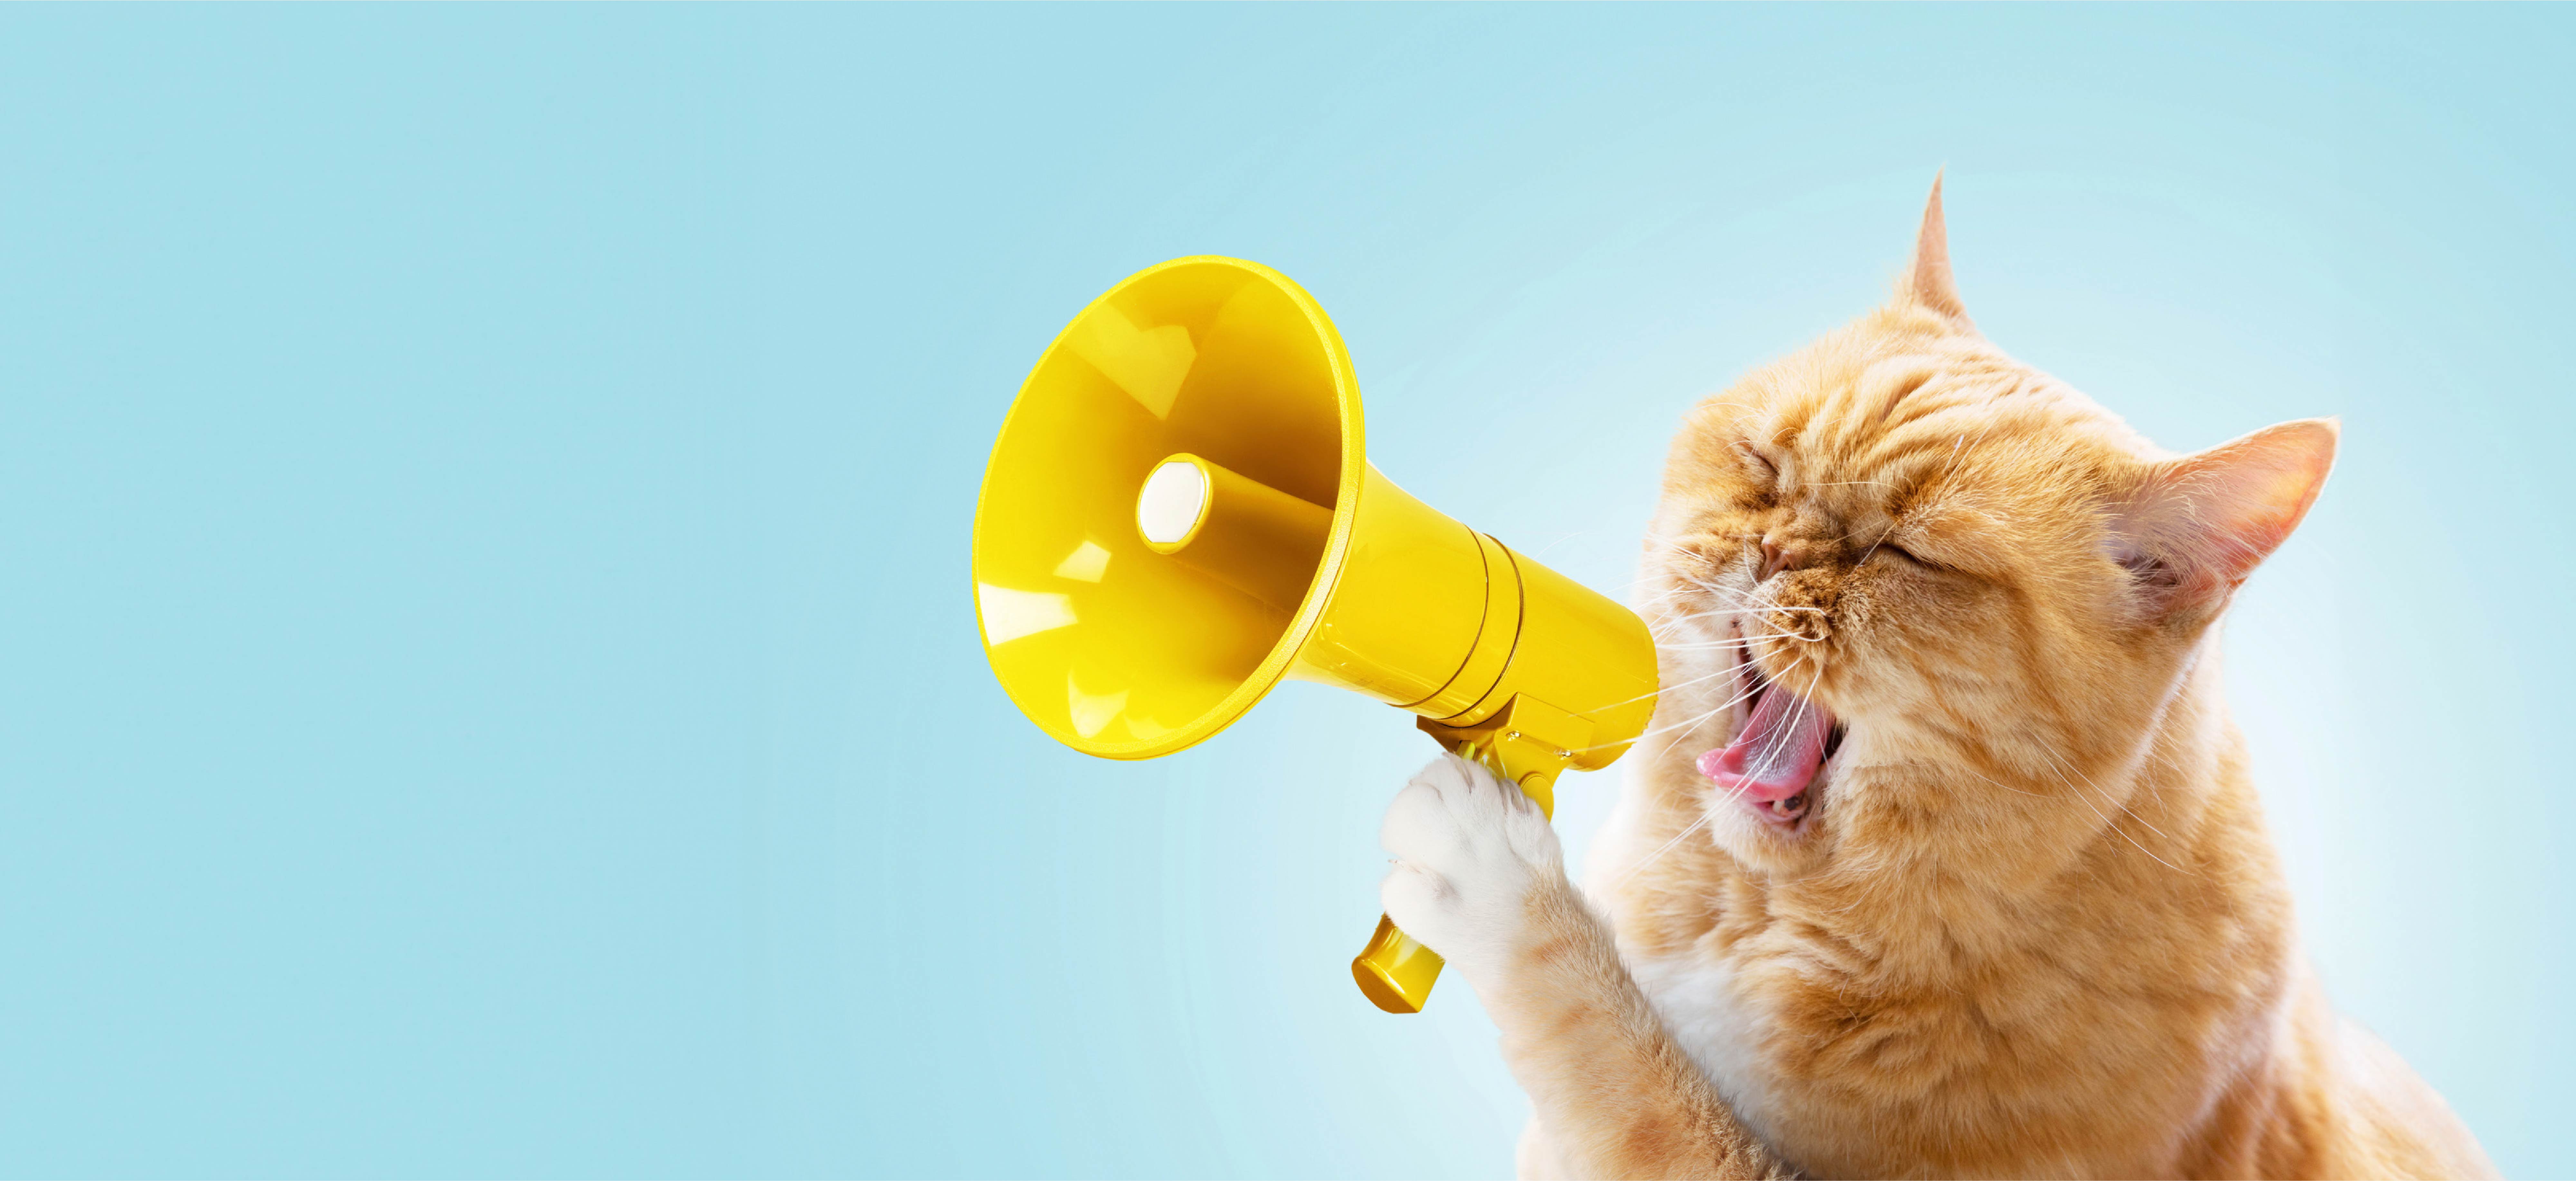 cat holding megaphone